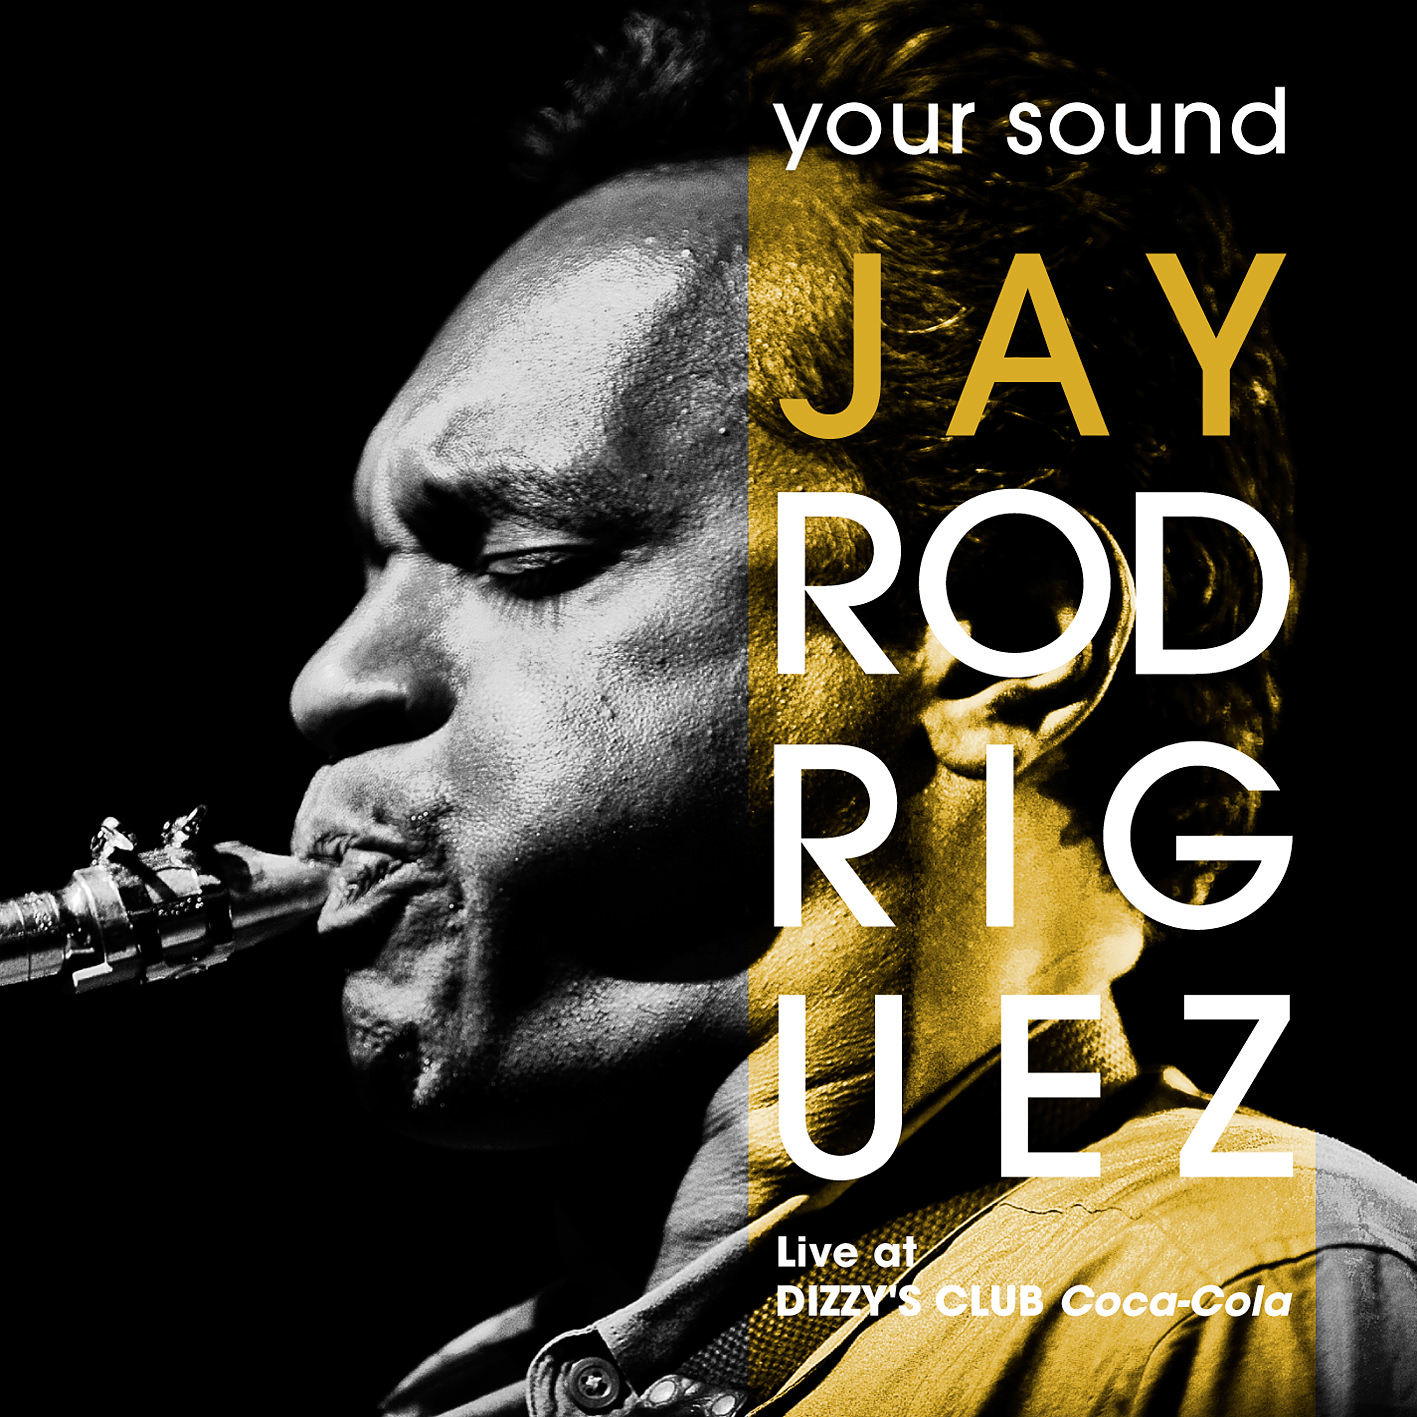 Flac 2018. Jay Rodriguez. Live Sound. Sound Rod.